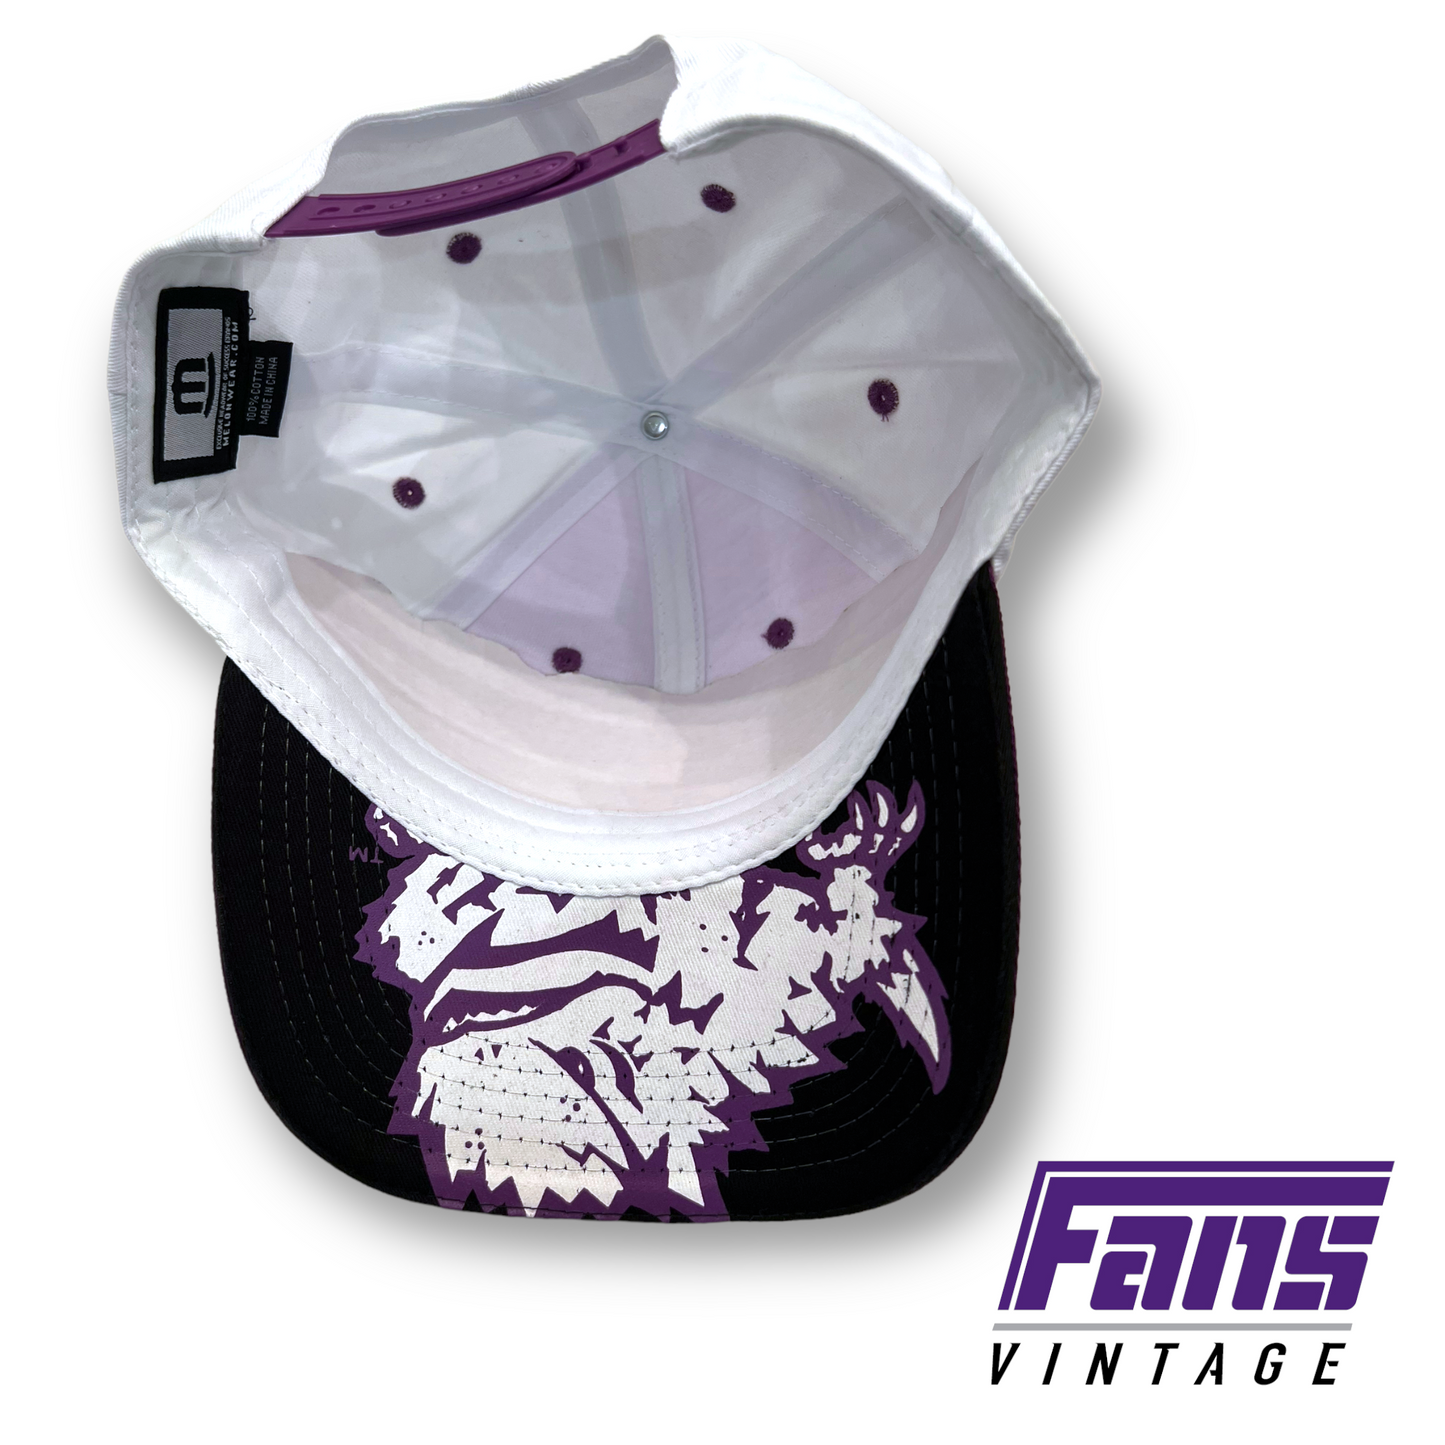 NEW! Special Edition TCU Texas Rangers Snapback Hat